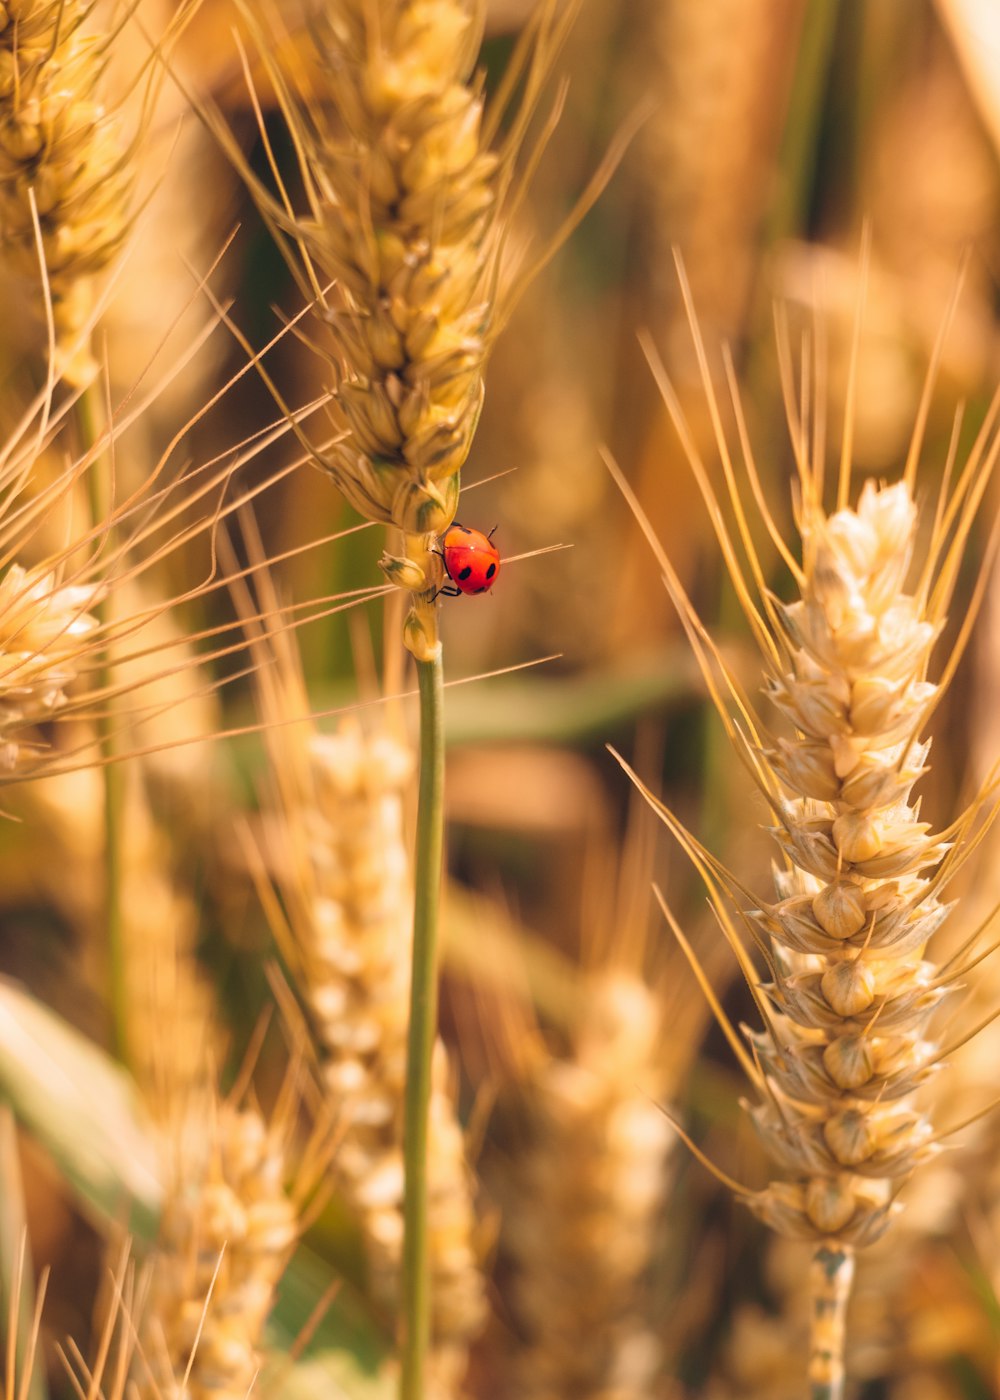 red ladybug on brown wheat during daytime